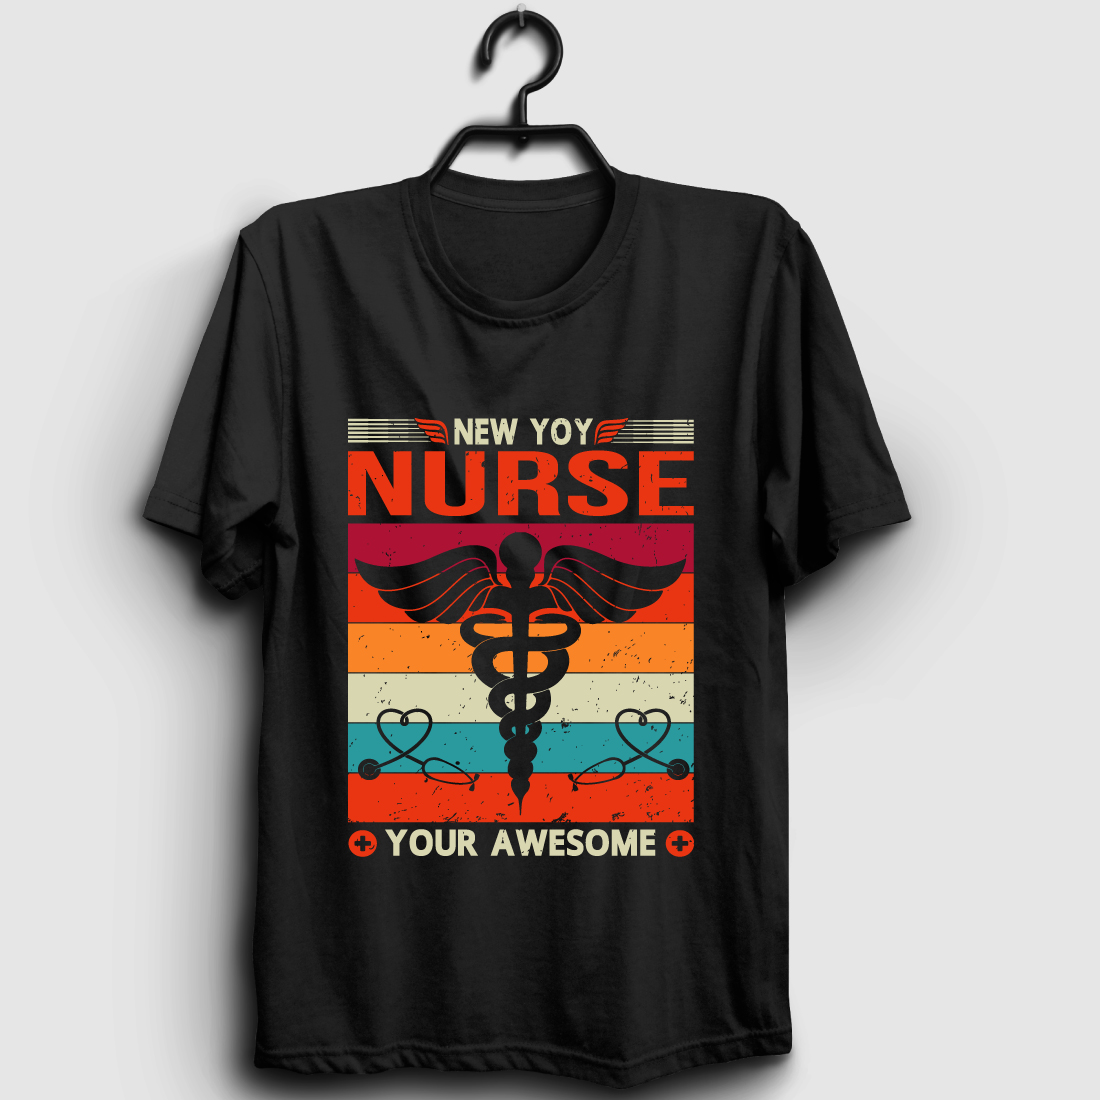 nurse t shirt design 02 426